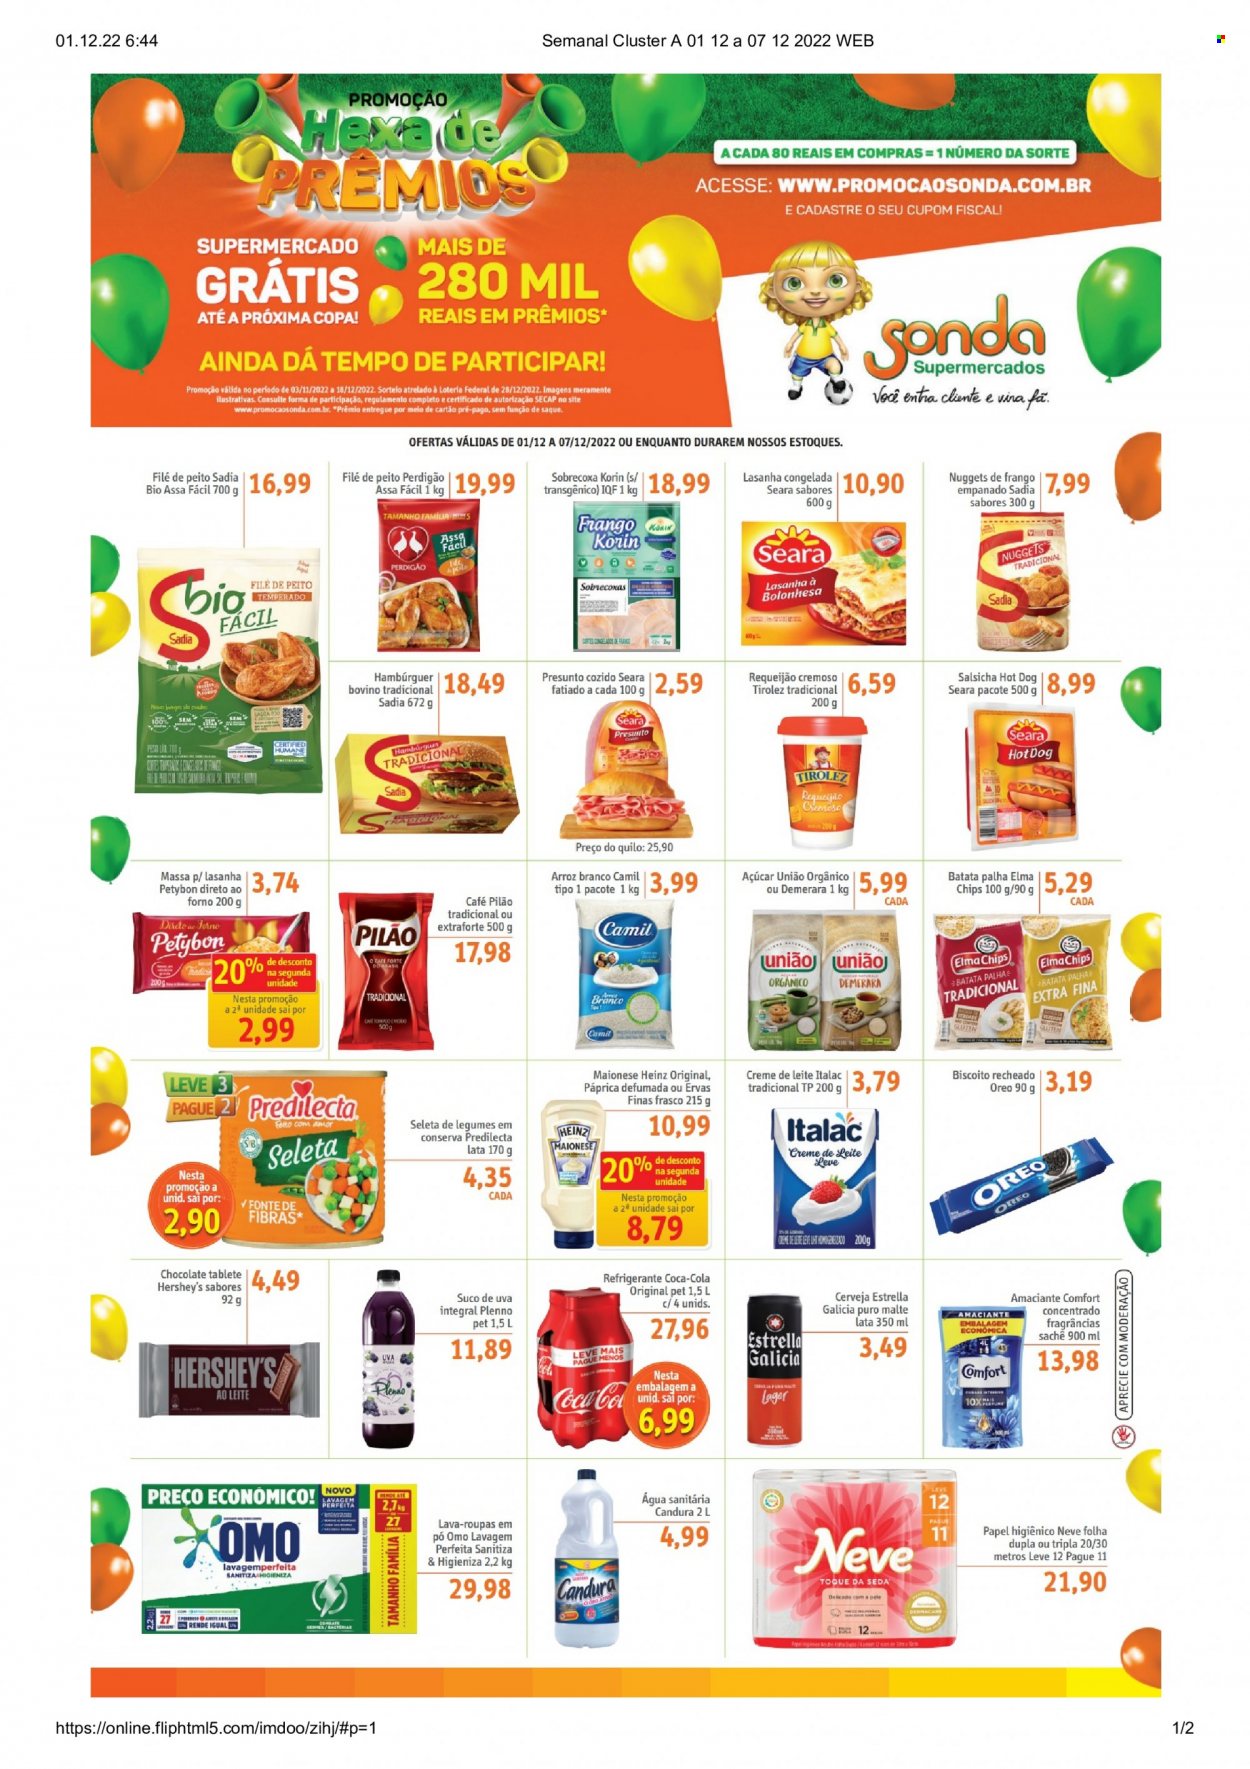 Encarte Sonda Supermercados  - 01.12.2022 - 07.12.2022.